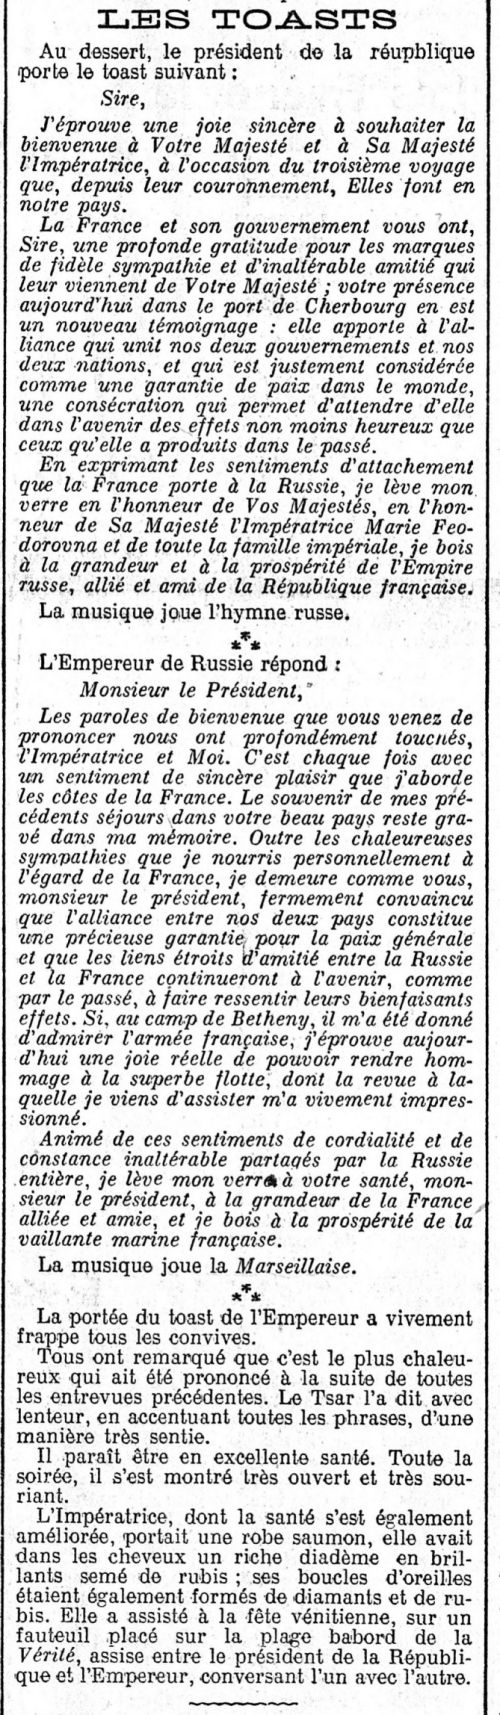 Le Gaulois du 01-08-1909 source: Gallica.bnf.fr